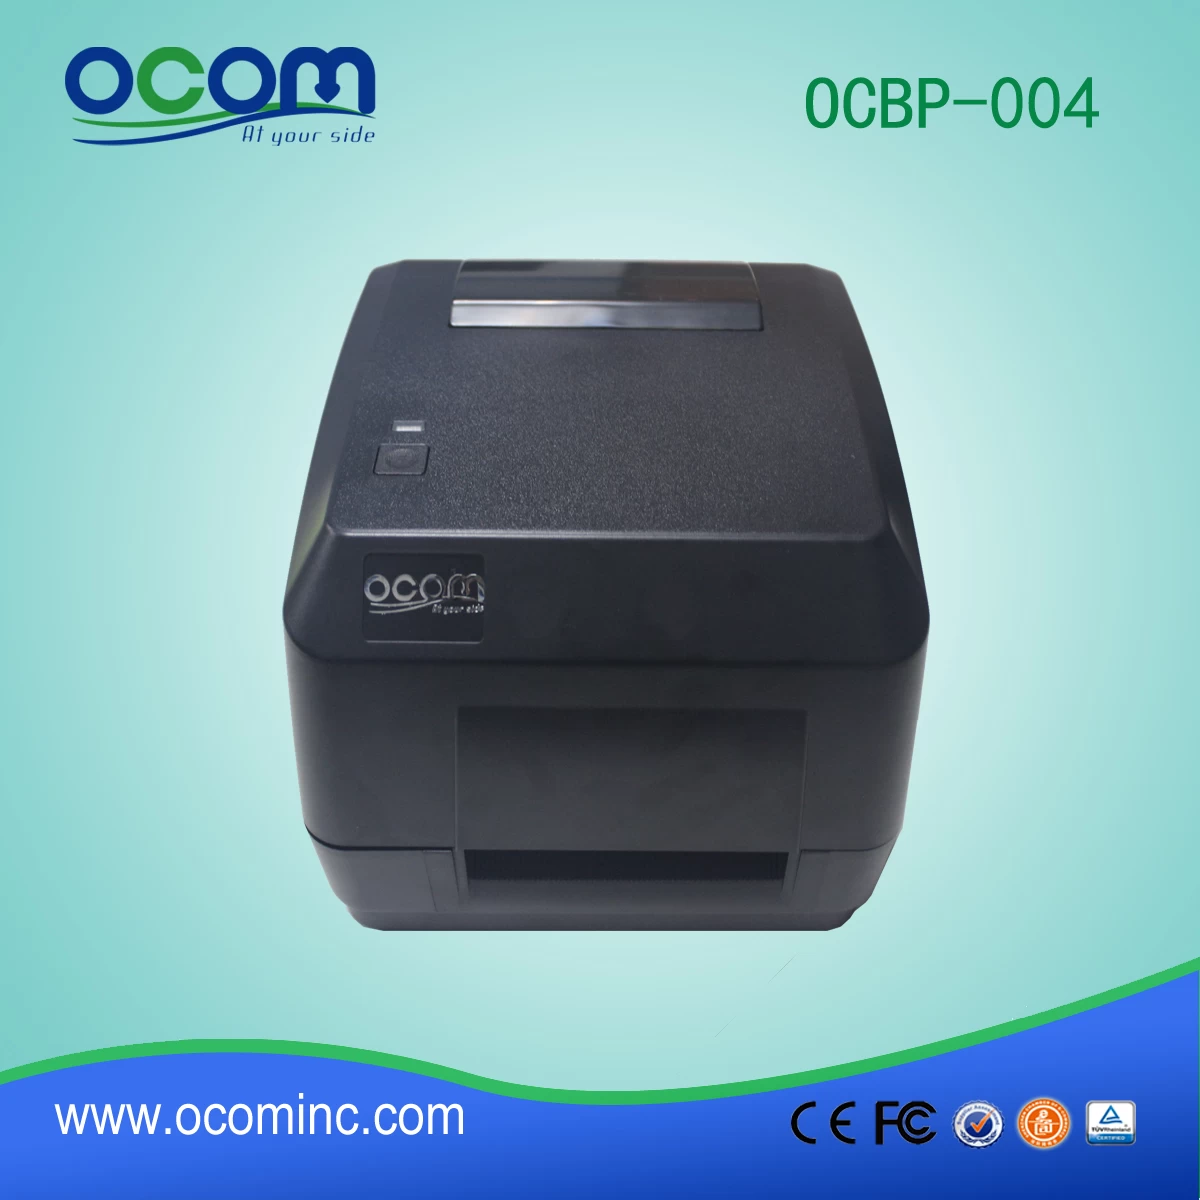 (OCBP-004) High quality Chinese heat transfer printer